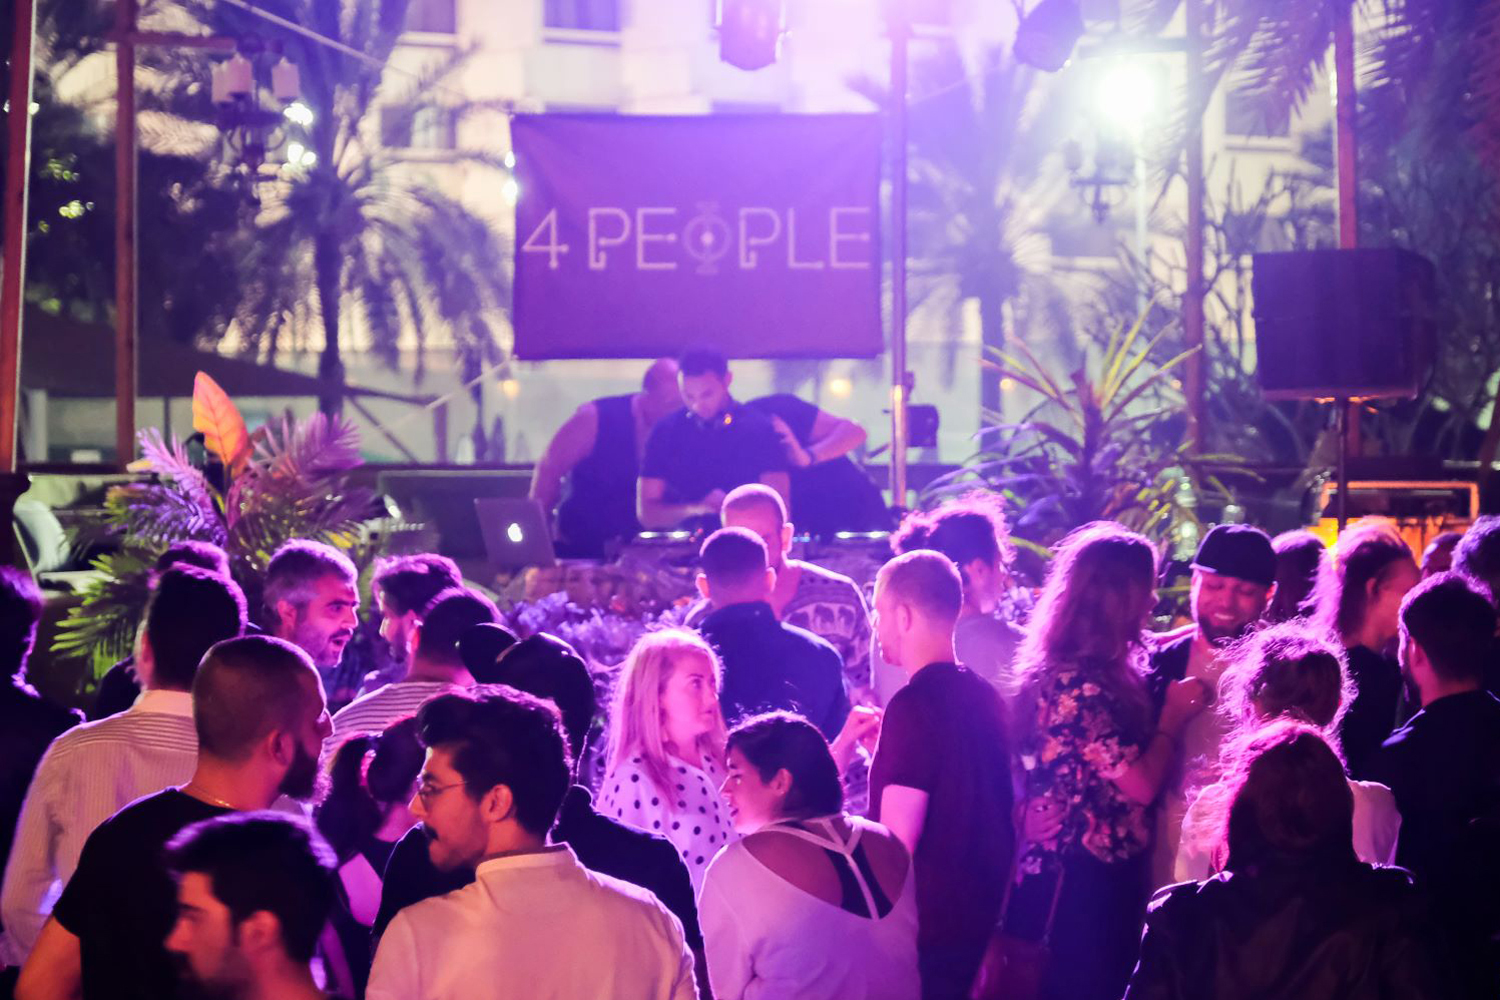 4 People club night is returning to Abu Dhabi this weekend | Bars